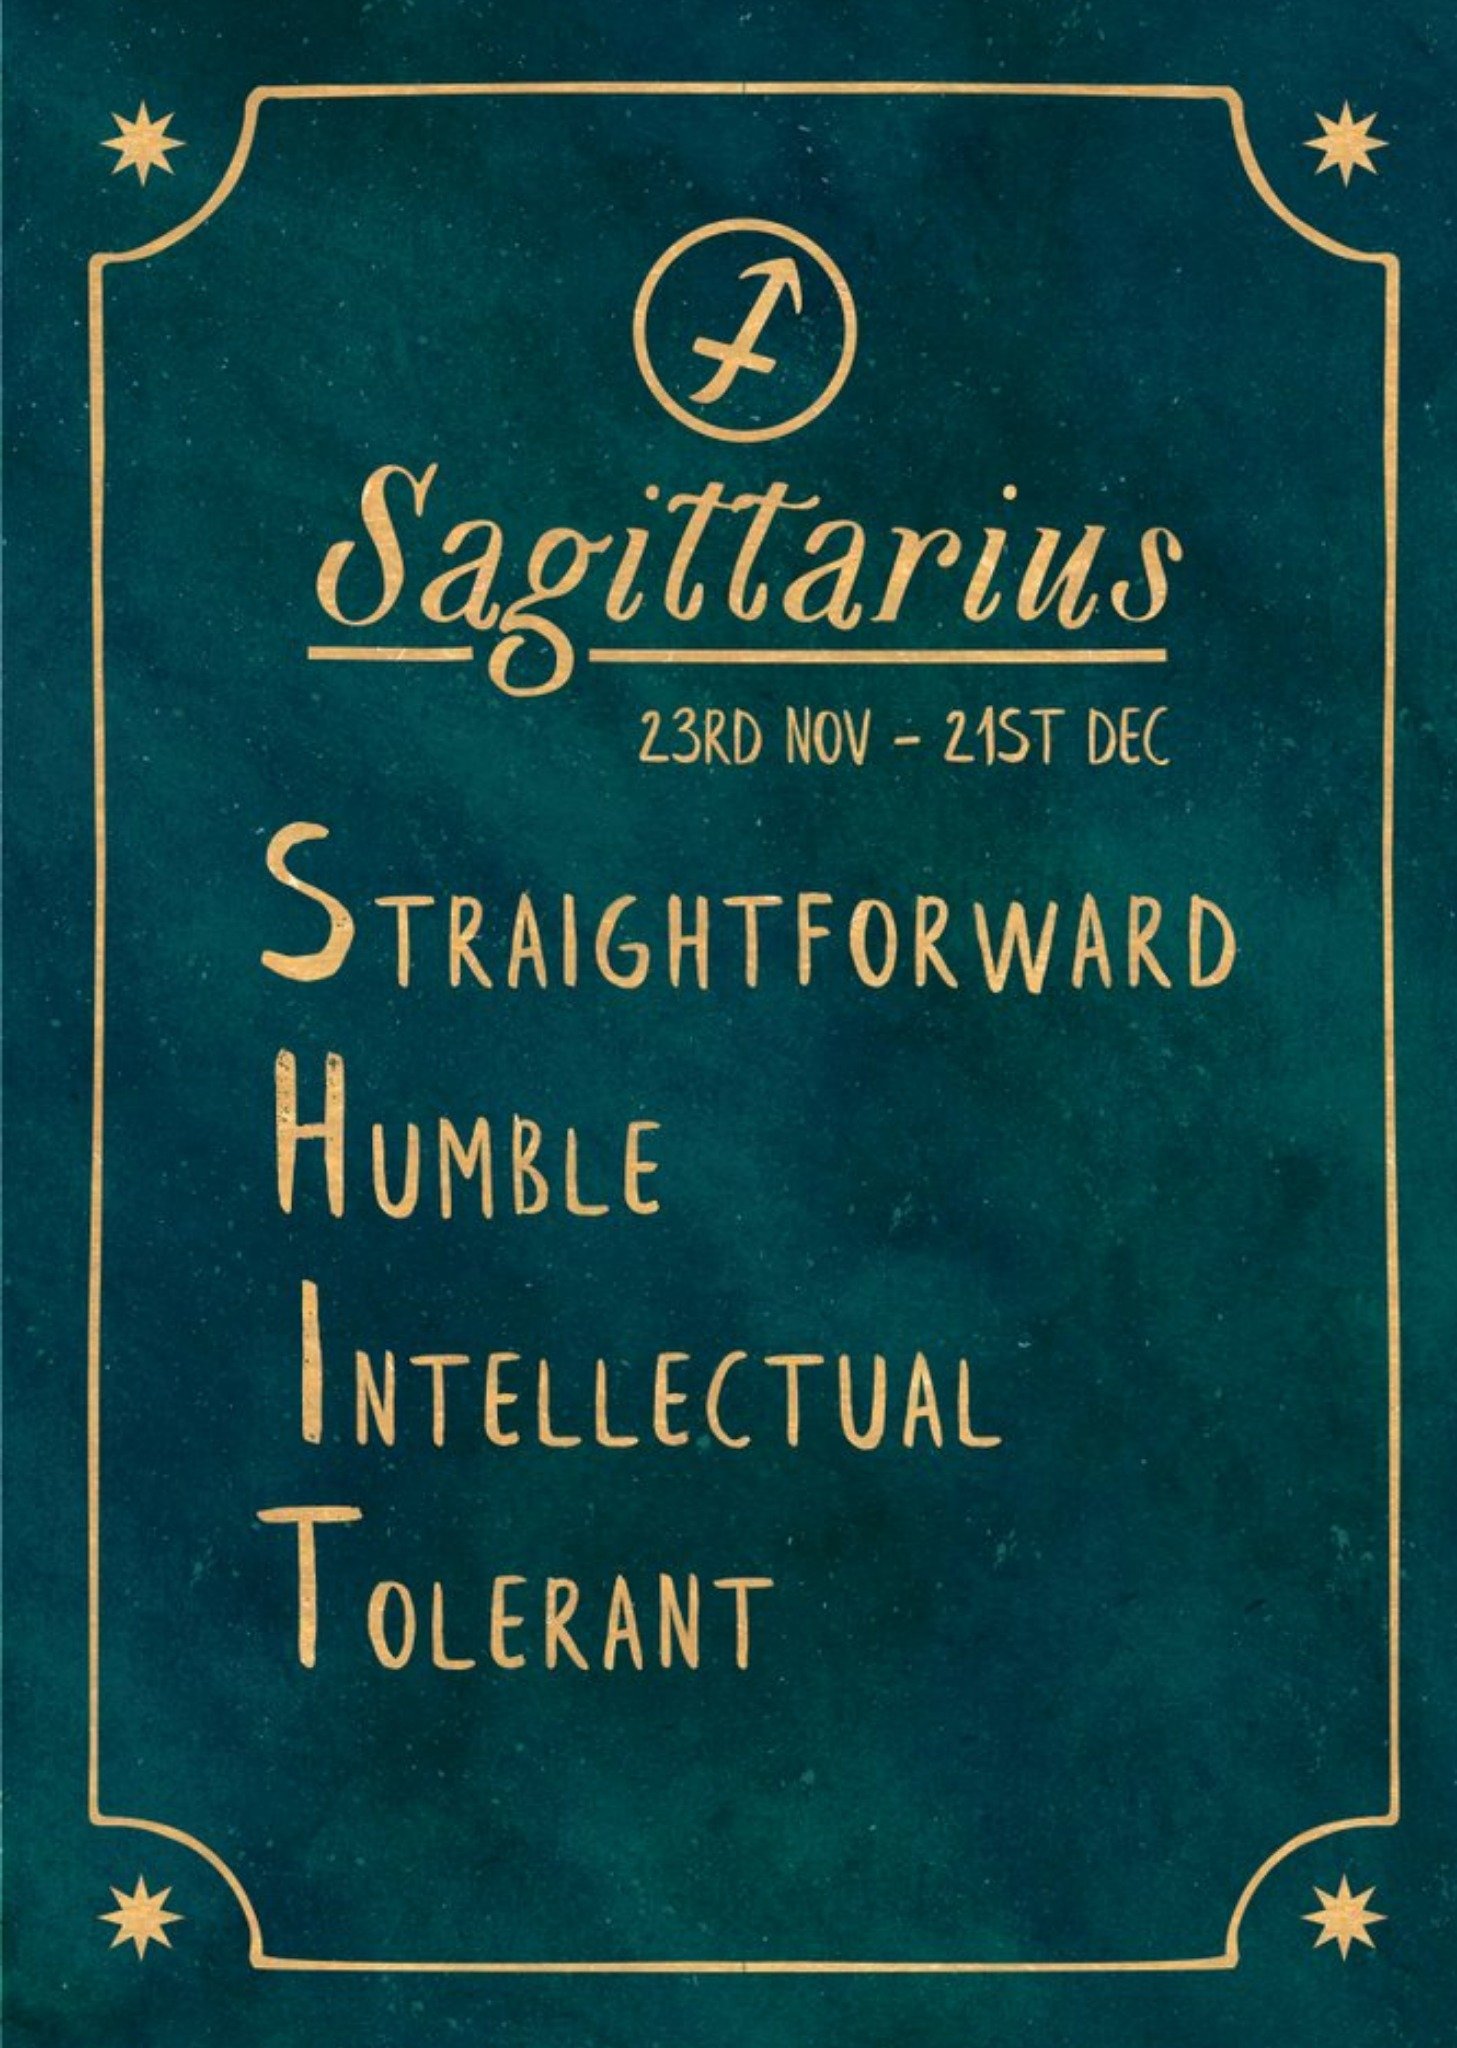 Moonpig Funny Rude Horoscope Birthday Card - Sagittarius, Large